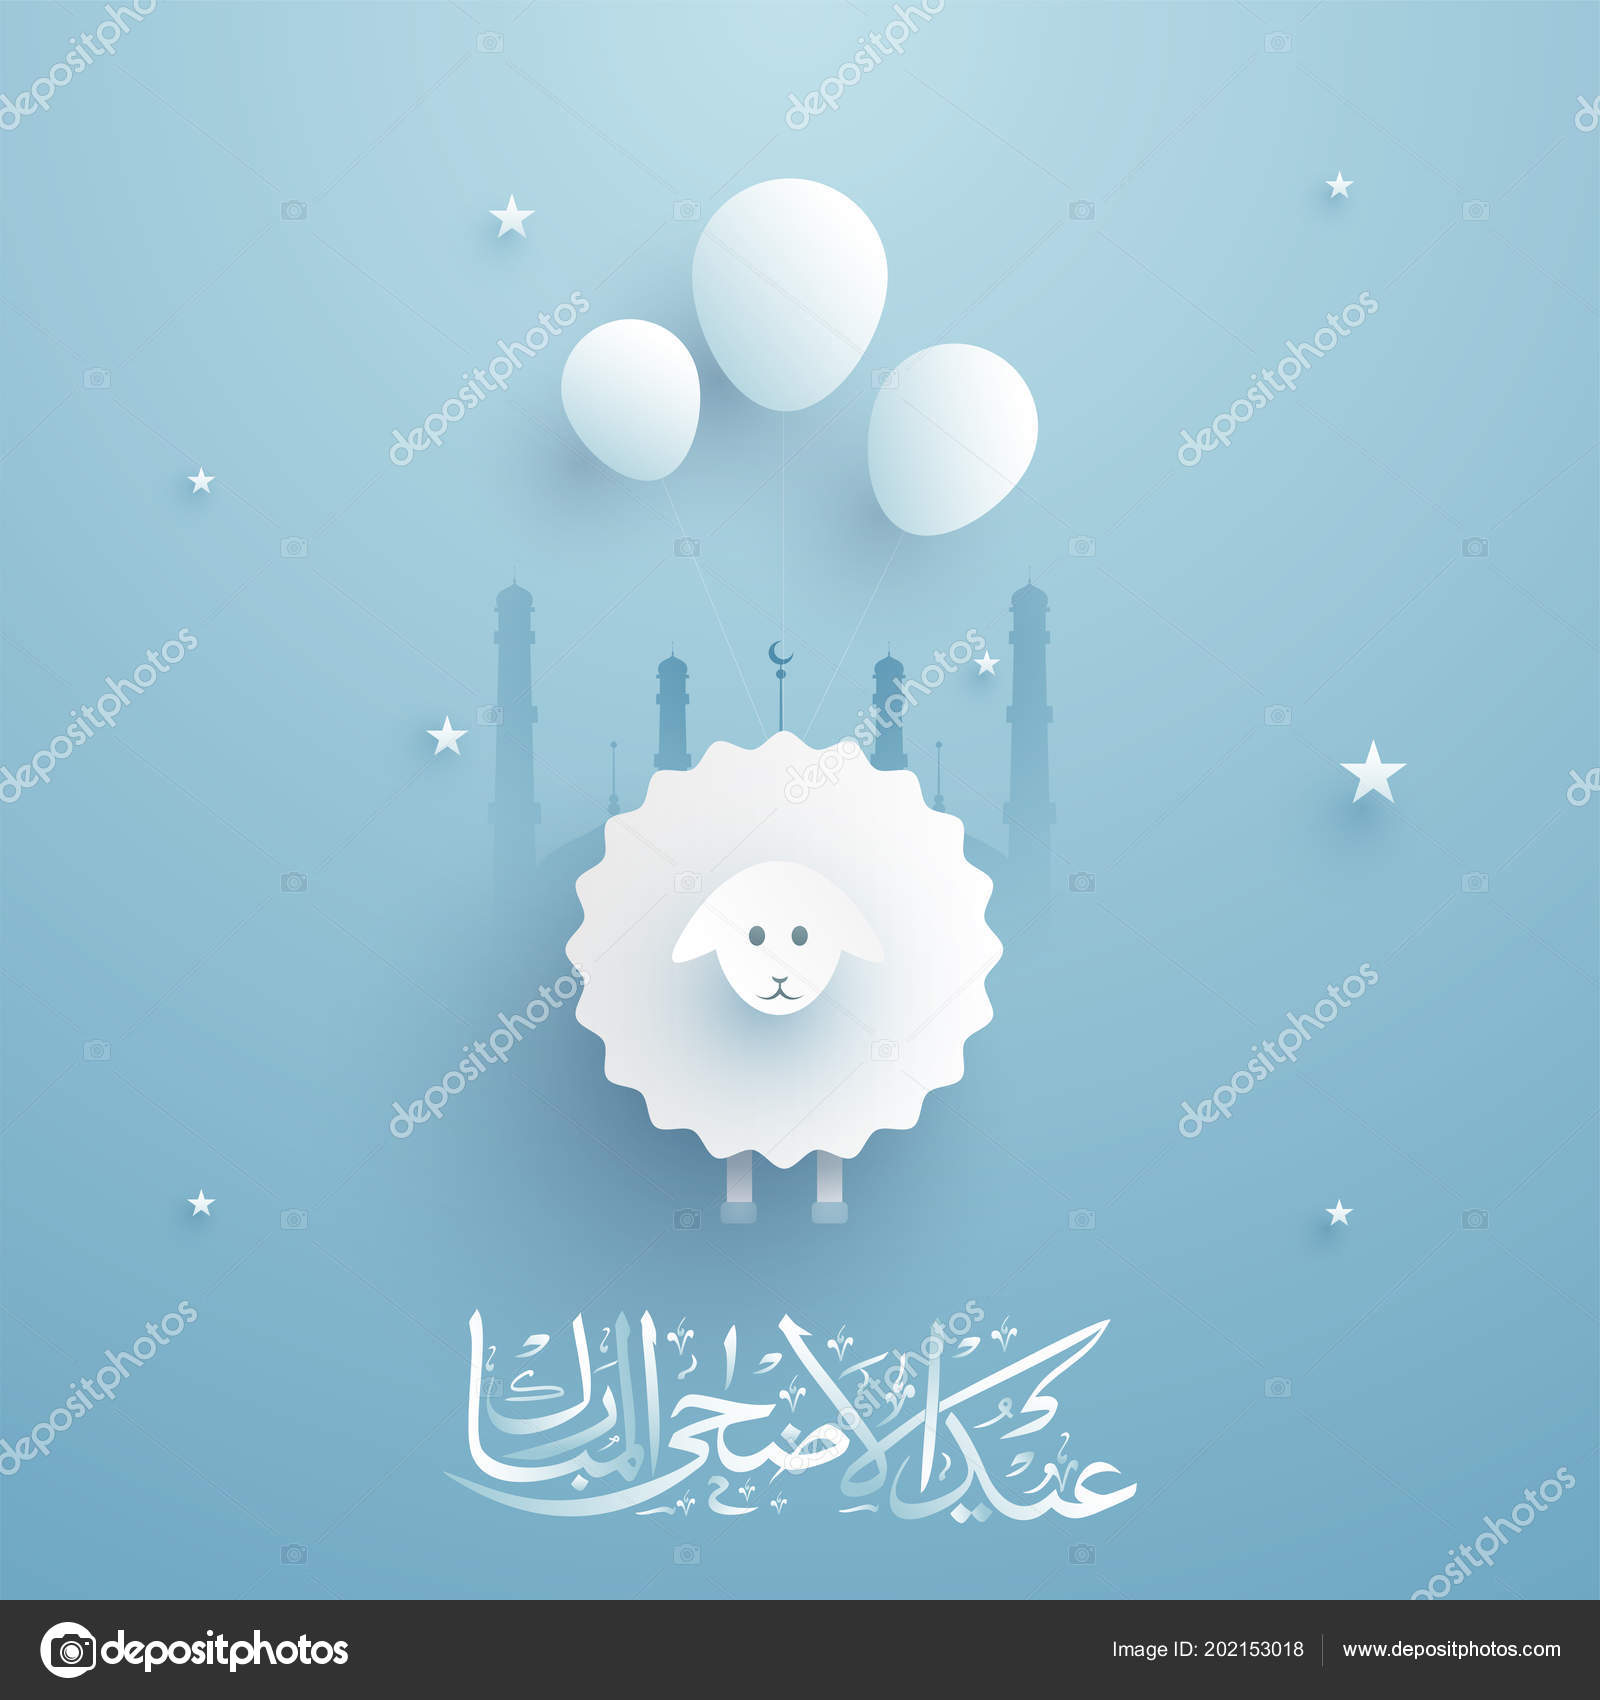 Bakra eid Vector Art Stock Images | Depositphotos